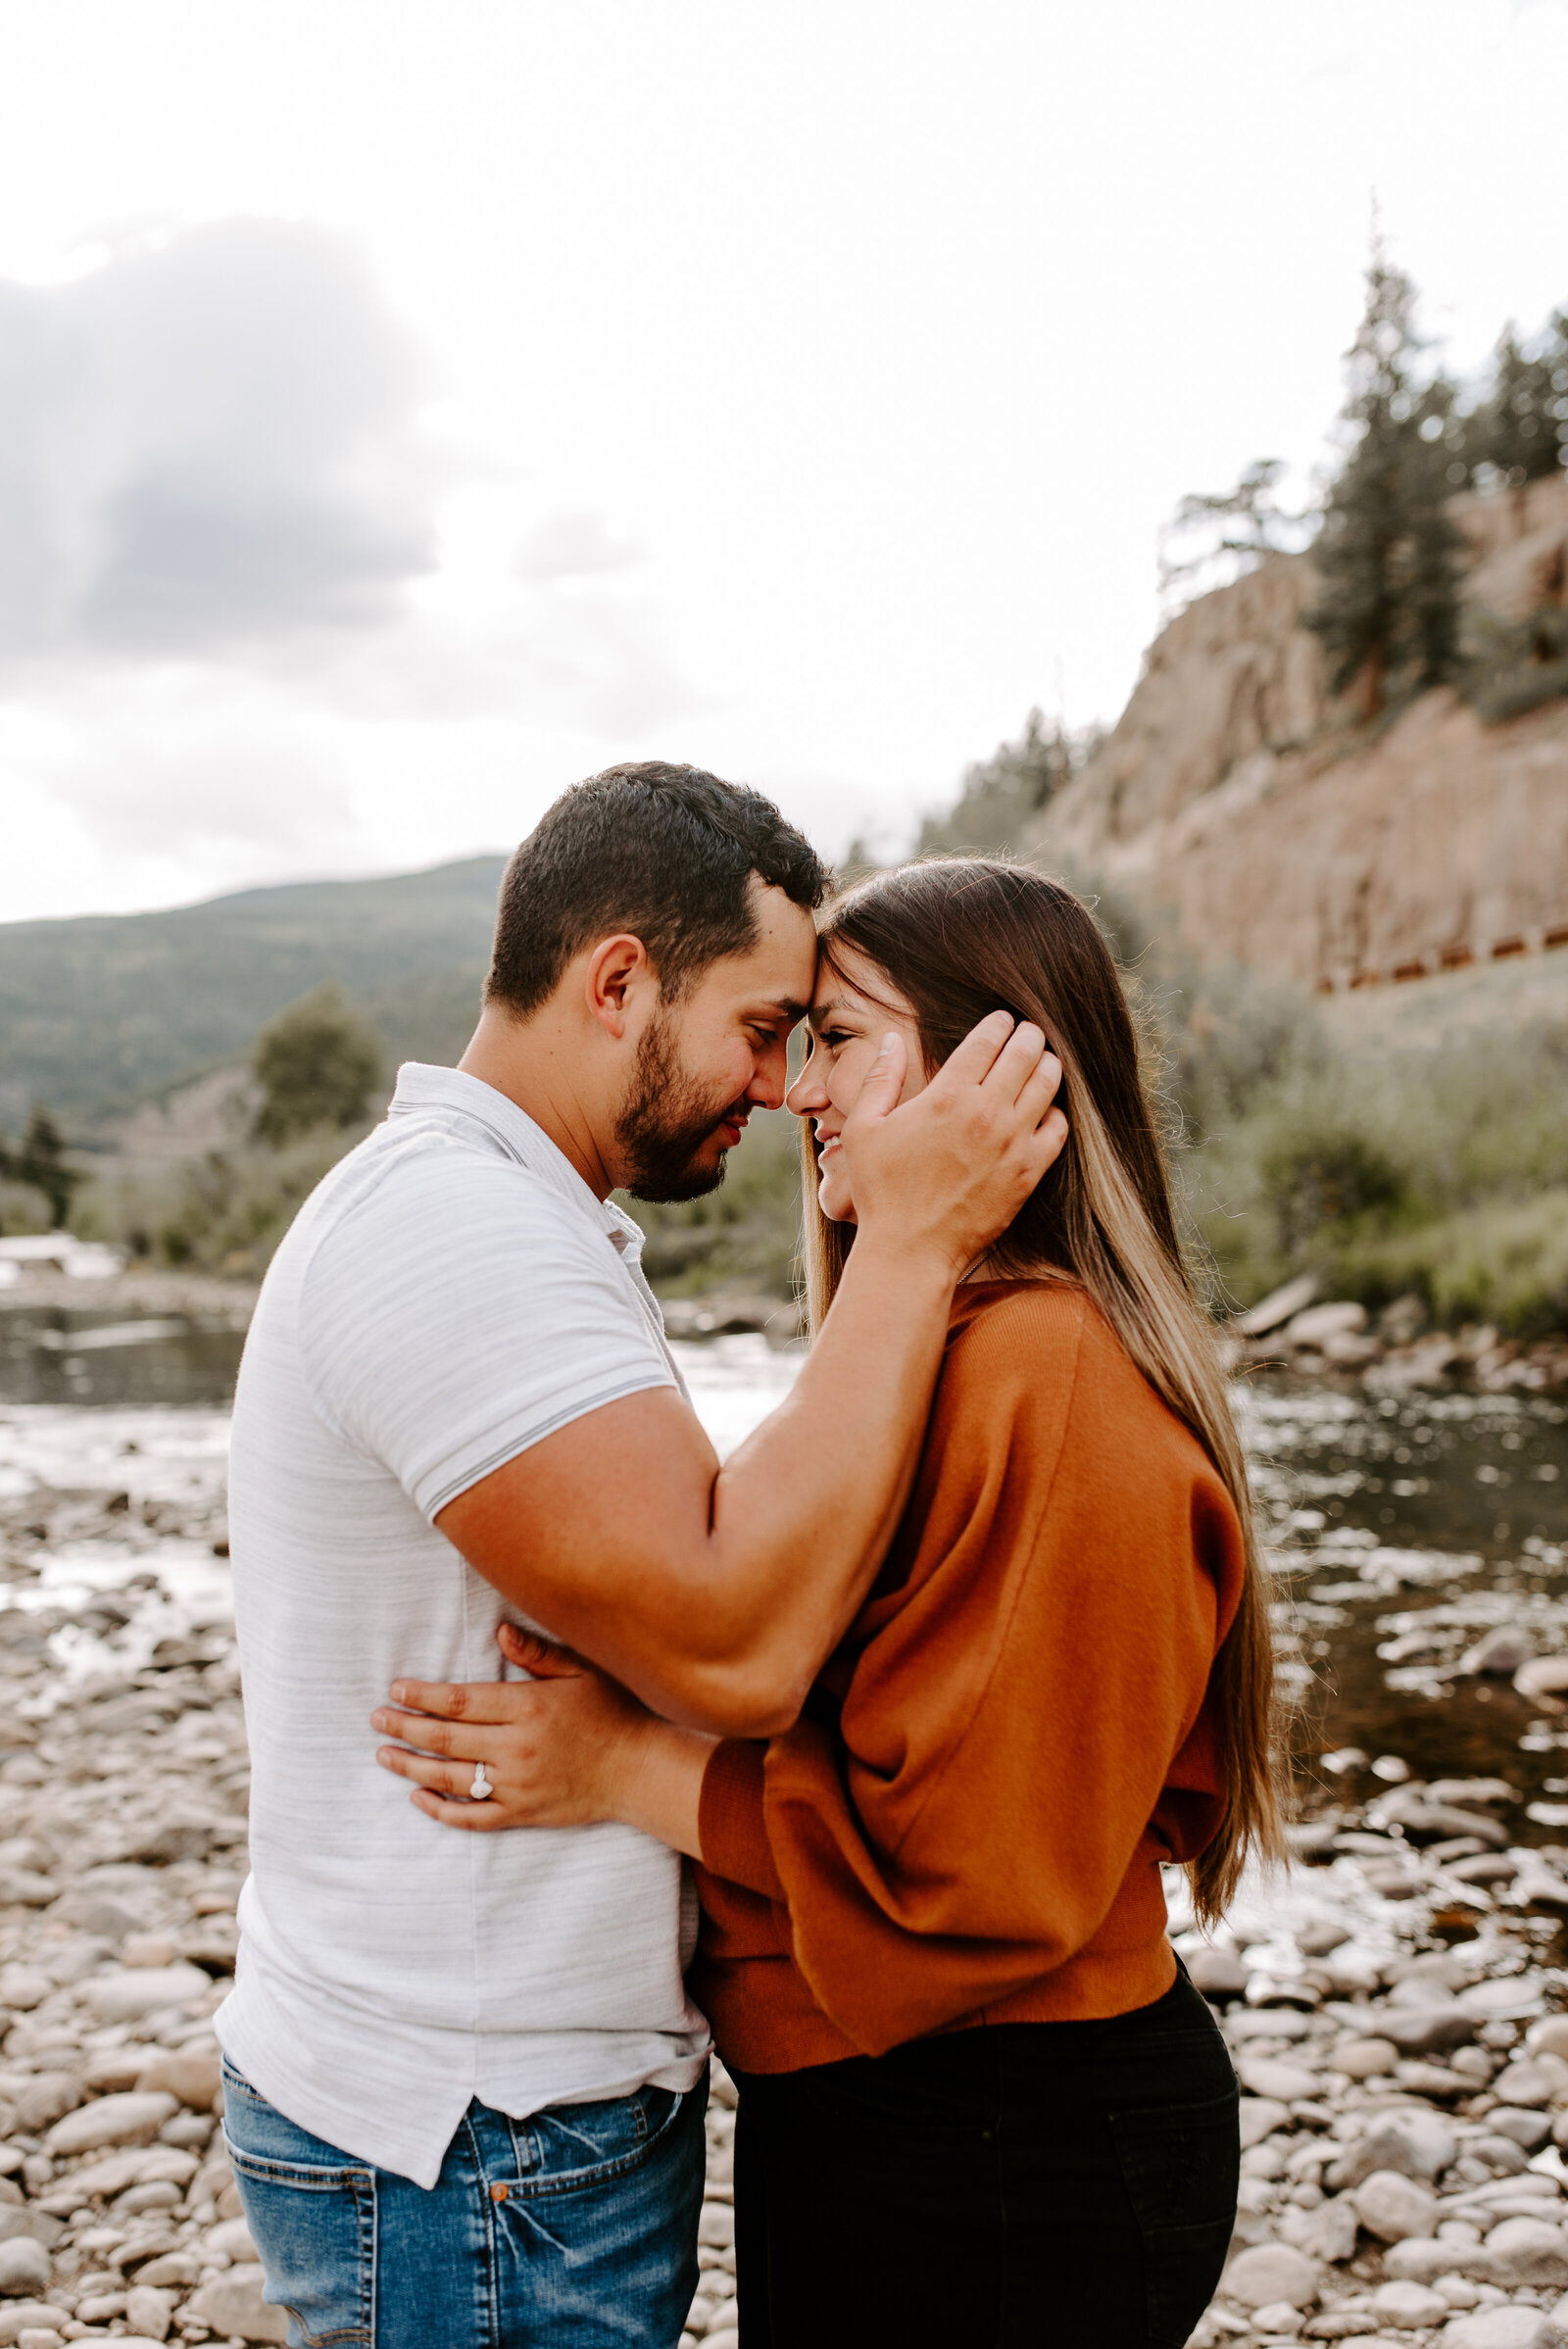 colorado springs Colorado+ south fork elopement + colorado wedding + surprise proposal + couples photos + proposal + engagement photos4